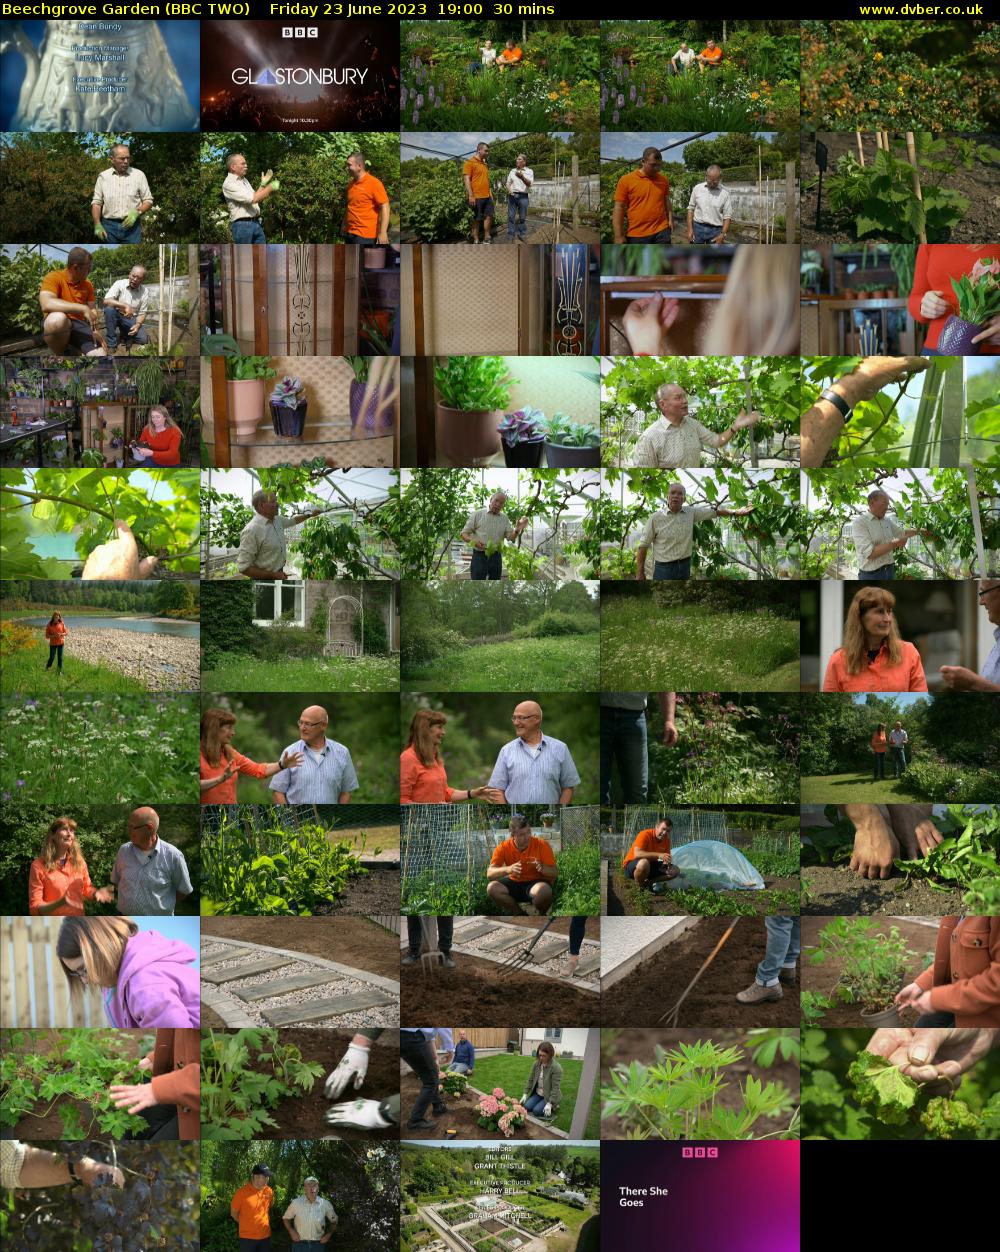 Beechgrove Garden (BBC TWO) Friday 23 June 2023 19:00 - 19:30